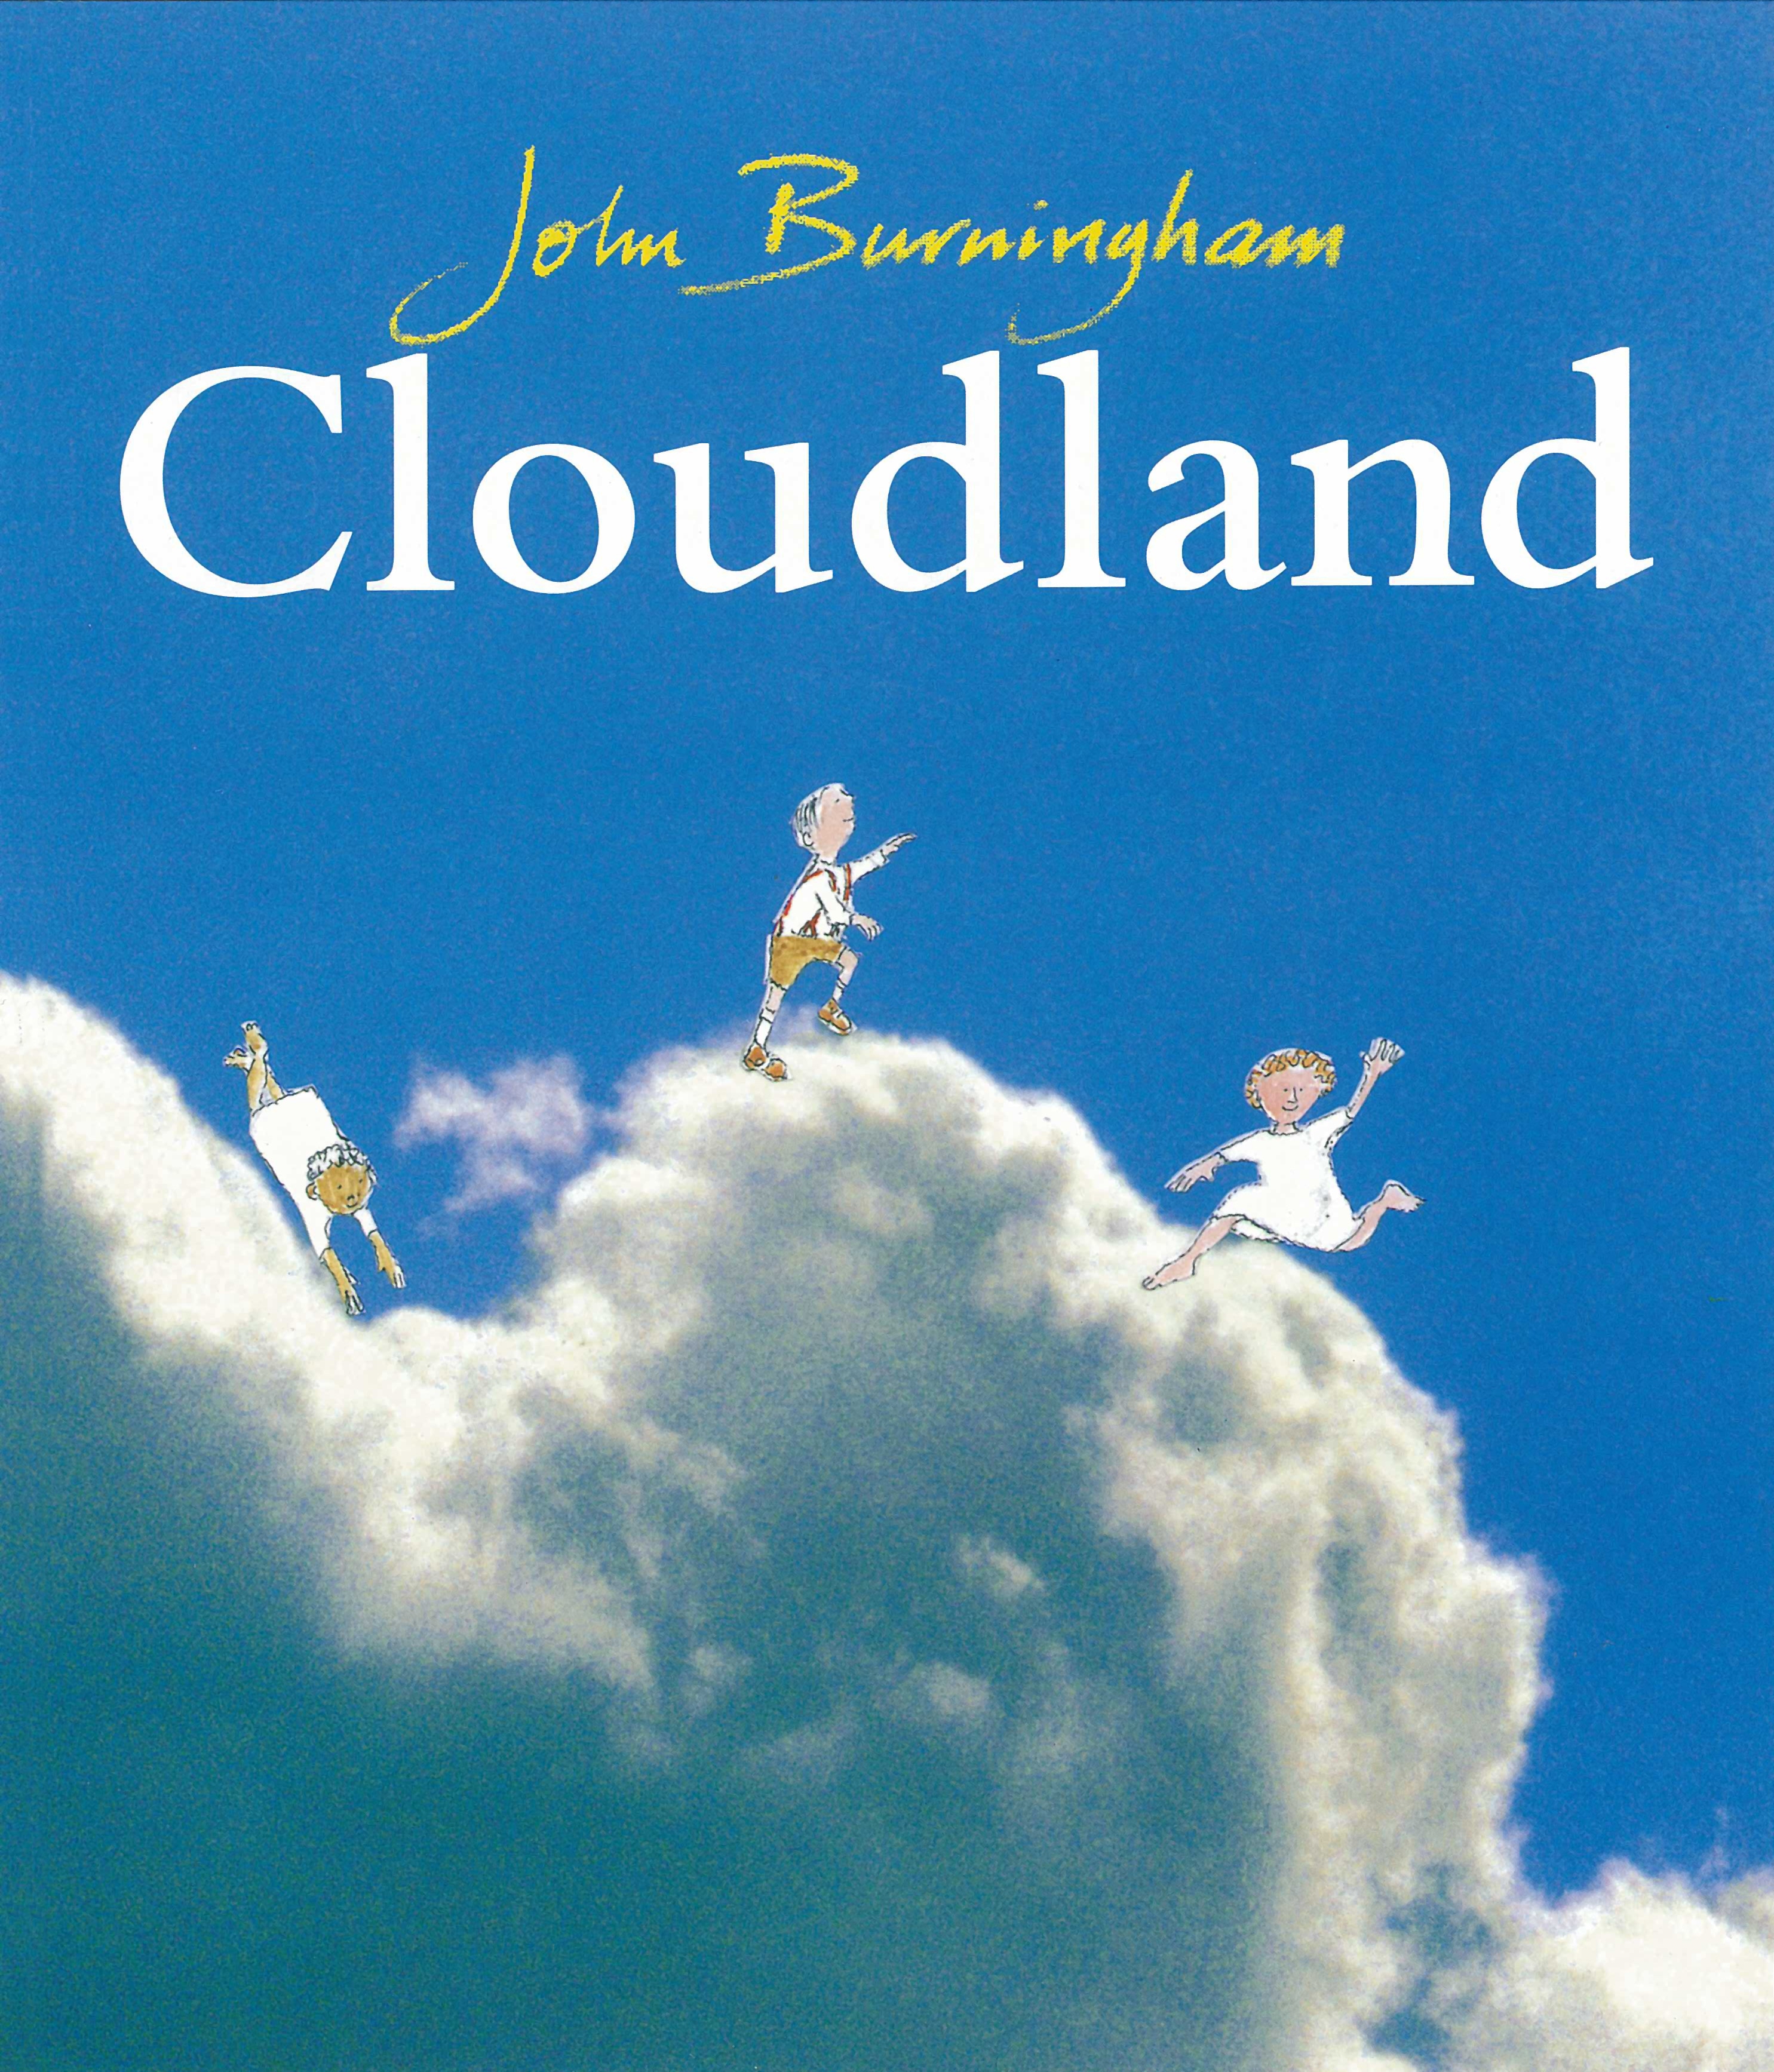 Book “Cloudland” by John Burningham — March 4, 1999